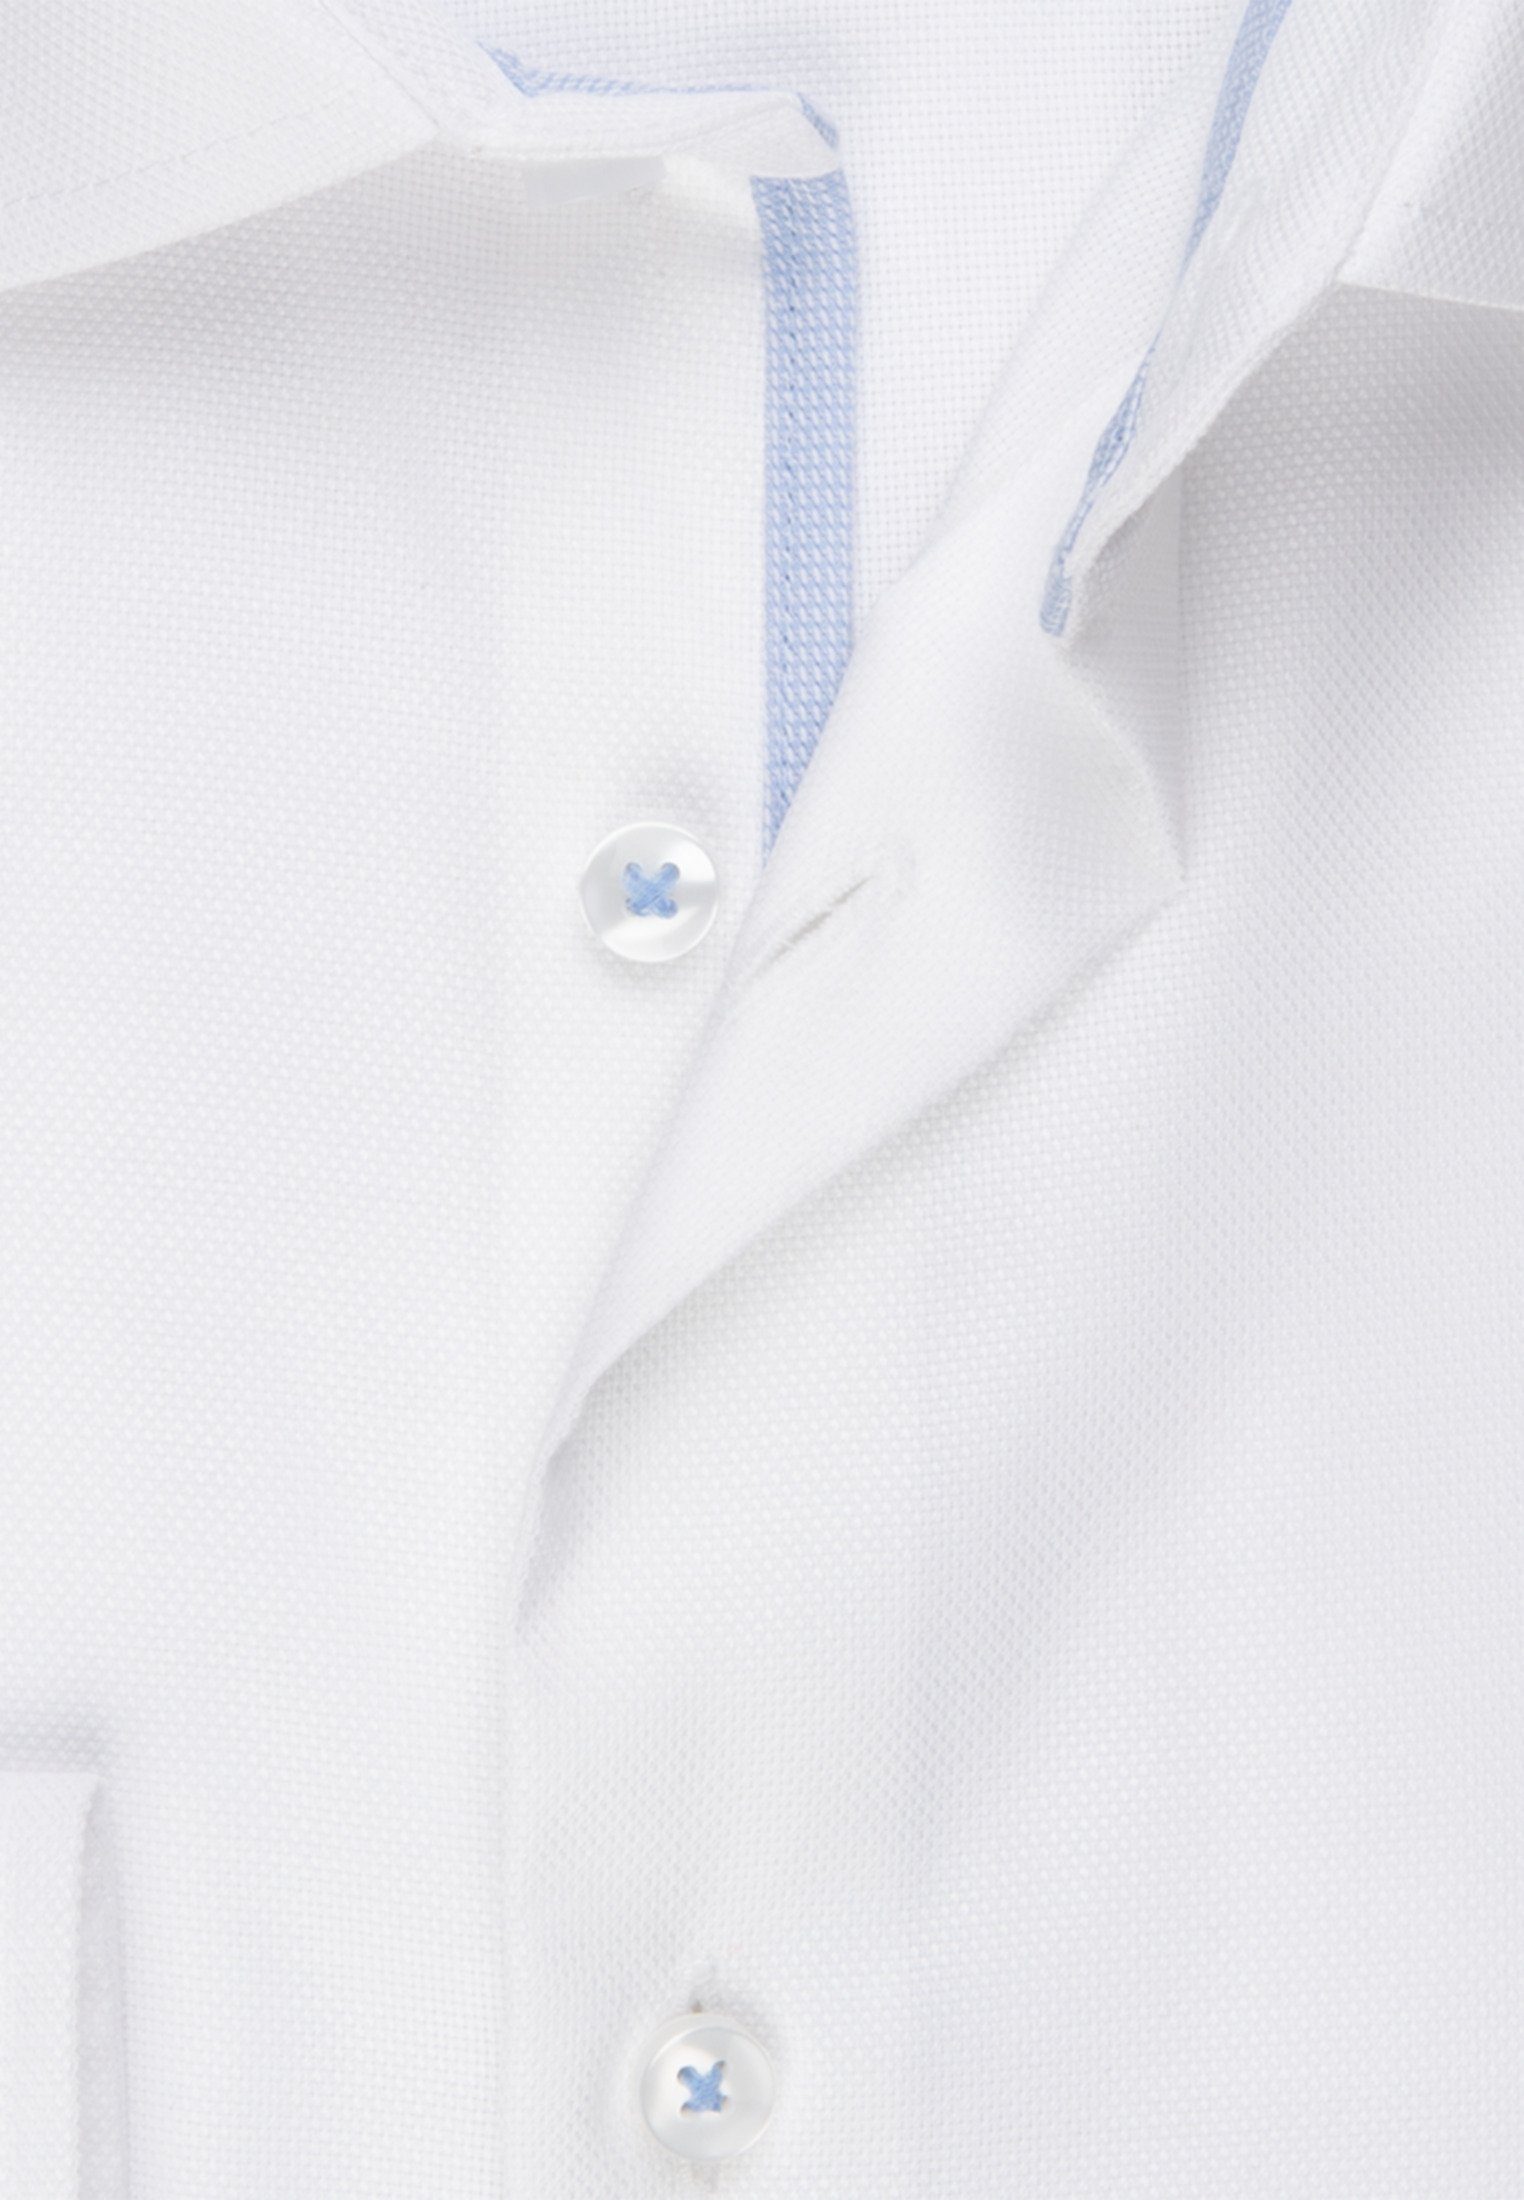 Langarm seidensticker Businesshemd Uni Kentkragen Weiß Shaped Shaped